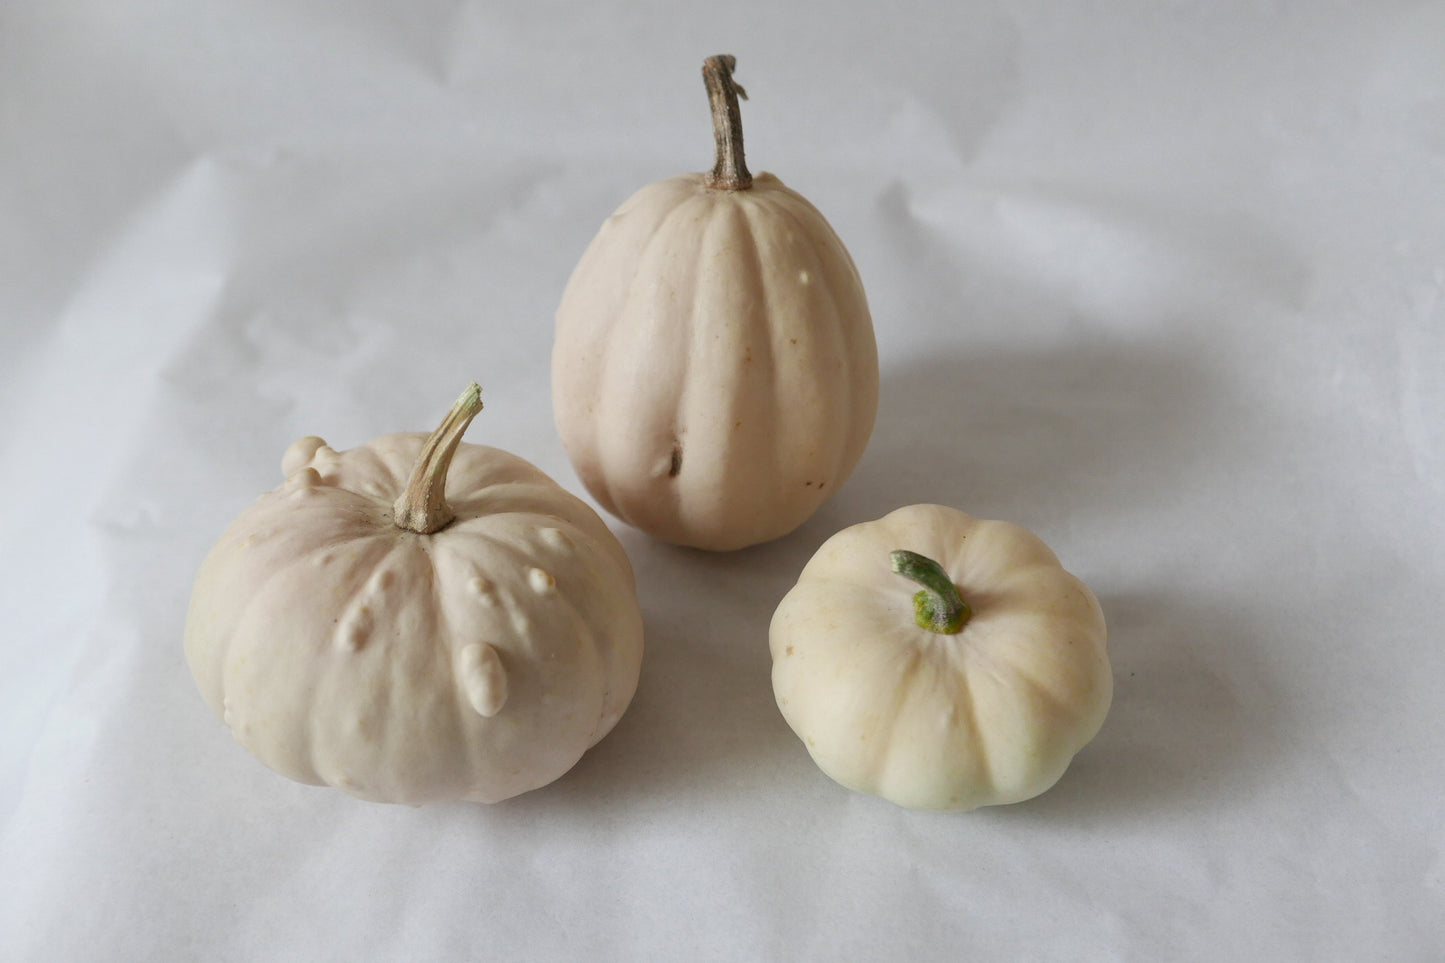 3 white, small ornamental pumpkins